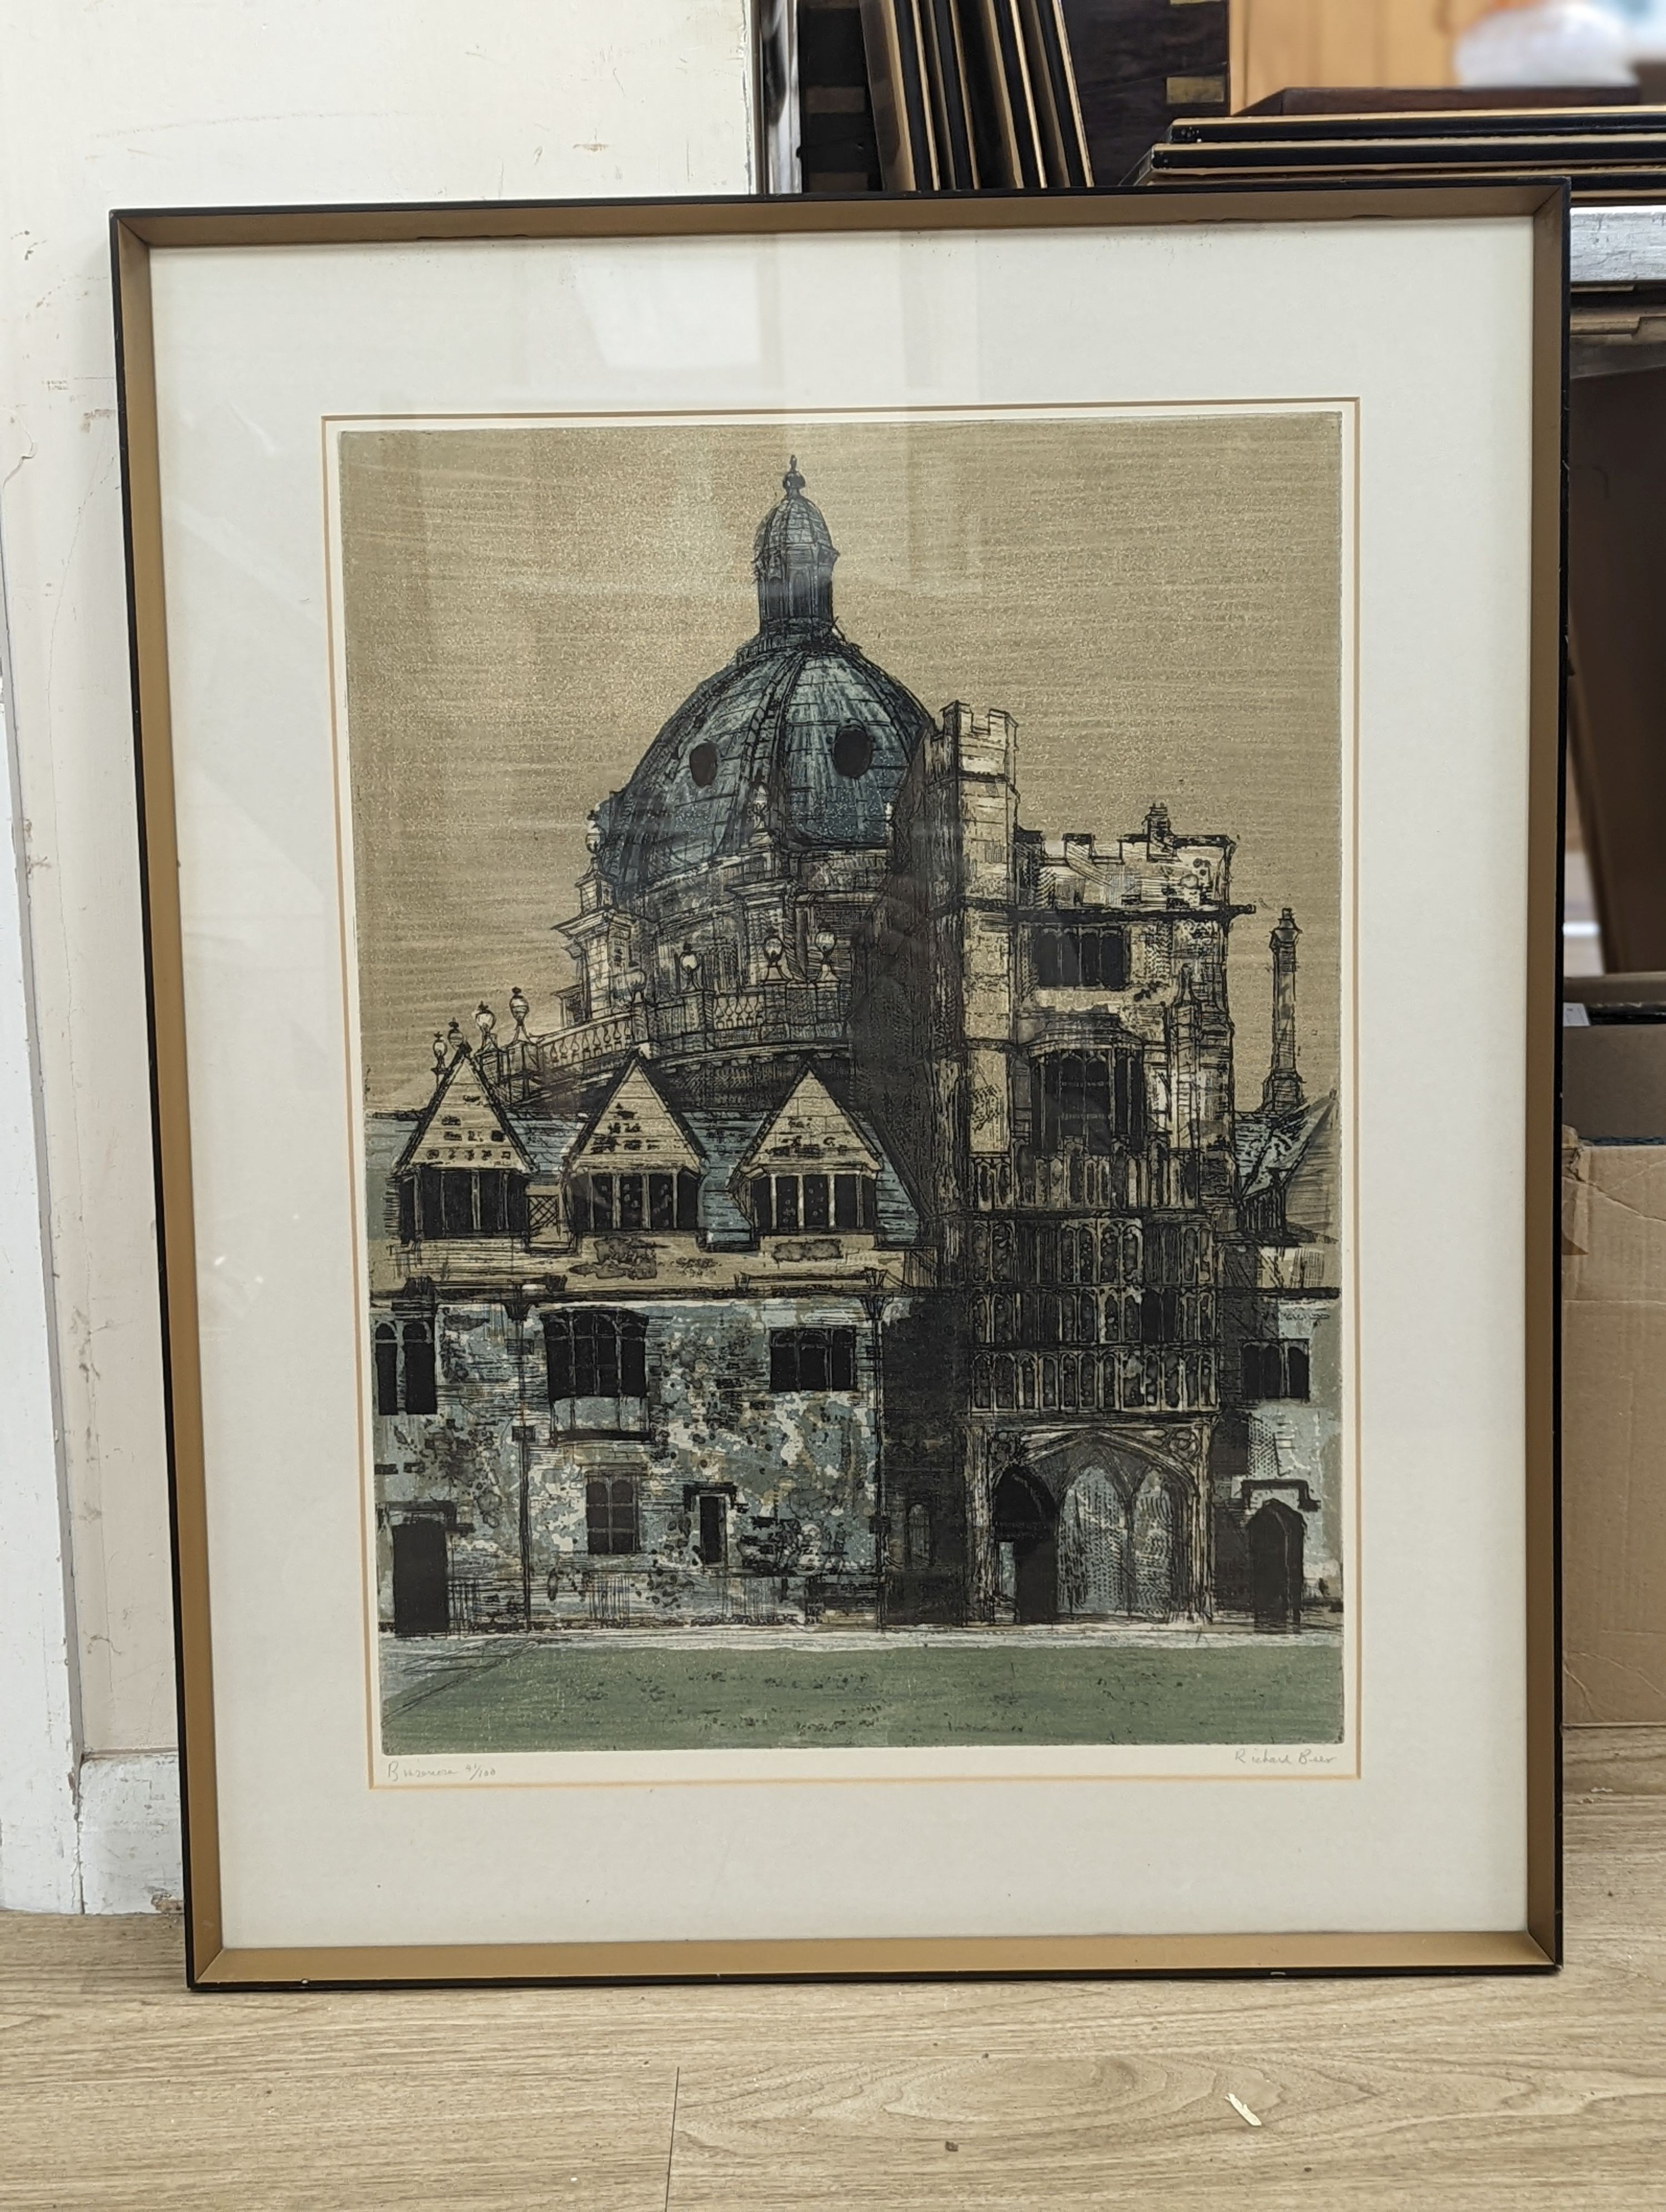 Richard Beer, limited edition print, 'Brasenose', signed, 41/100, 58 x 43cm